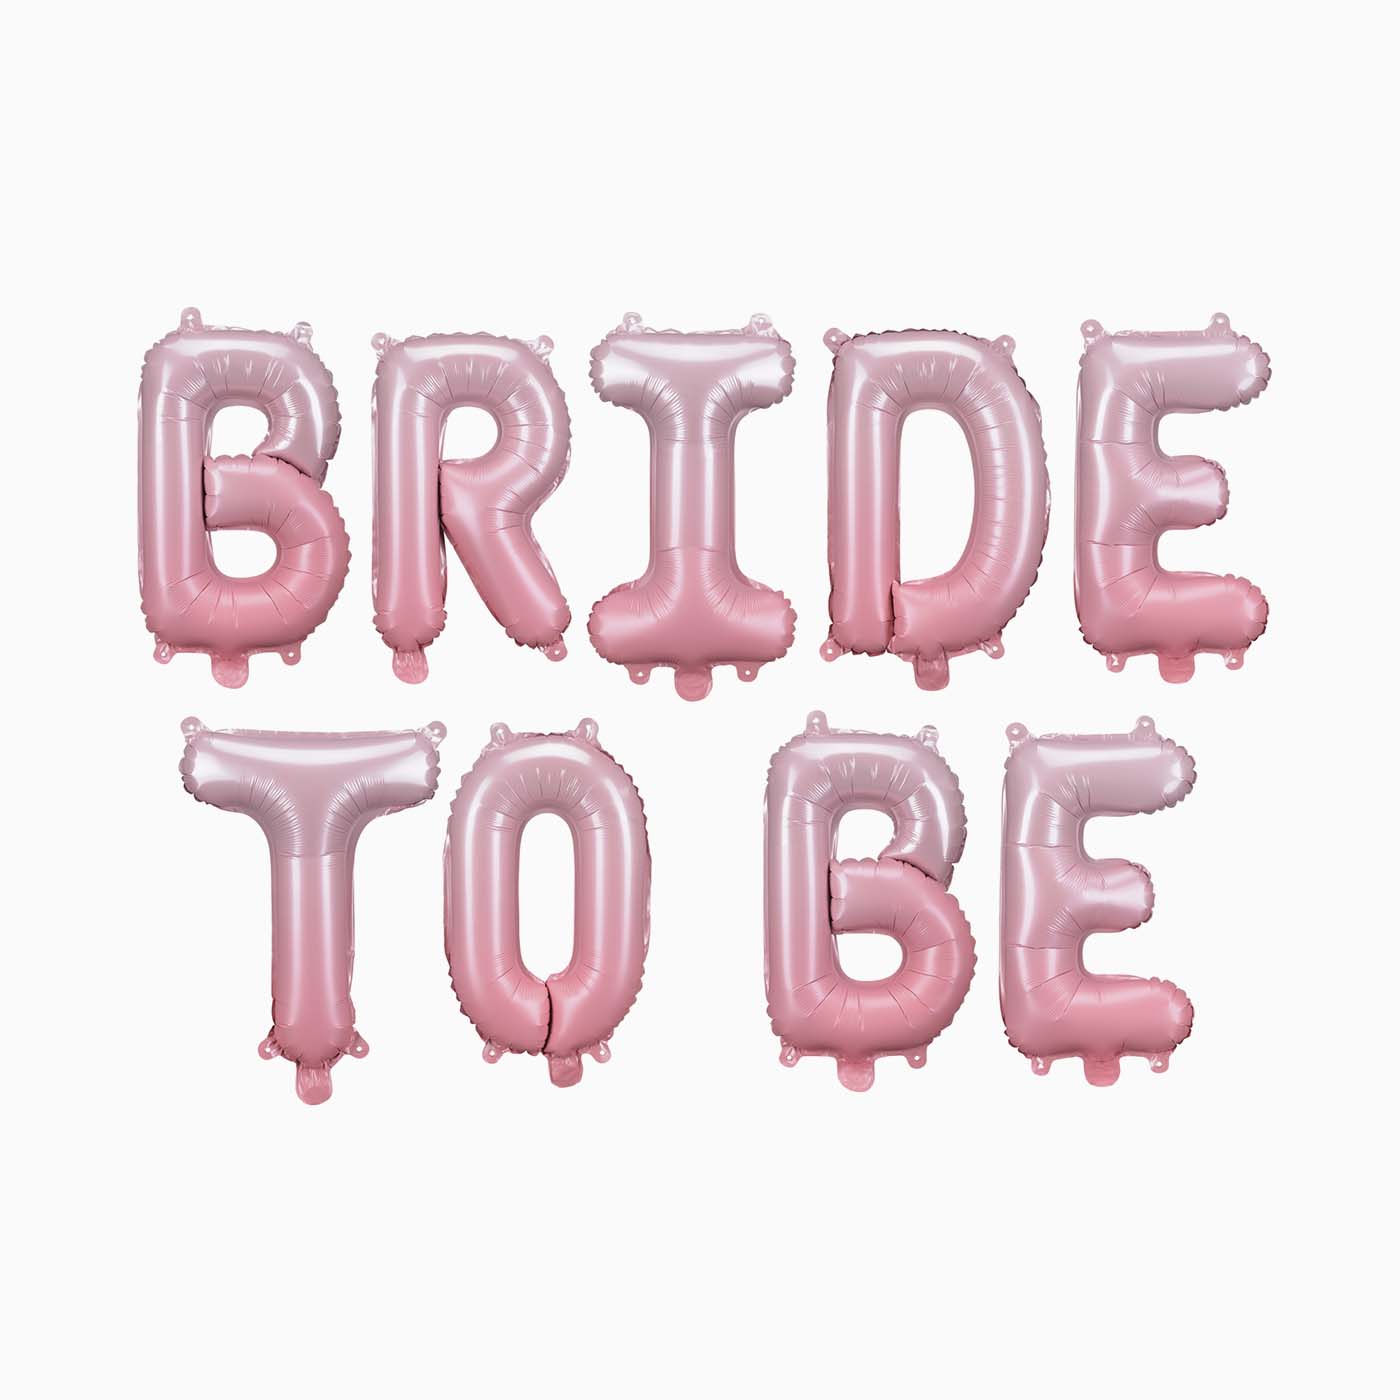 Globo Letters Folie "Braut" Bachelorette Party sein